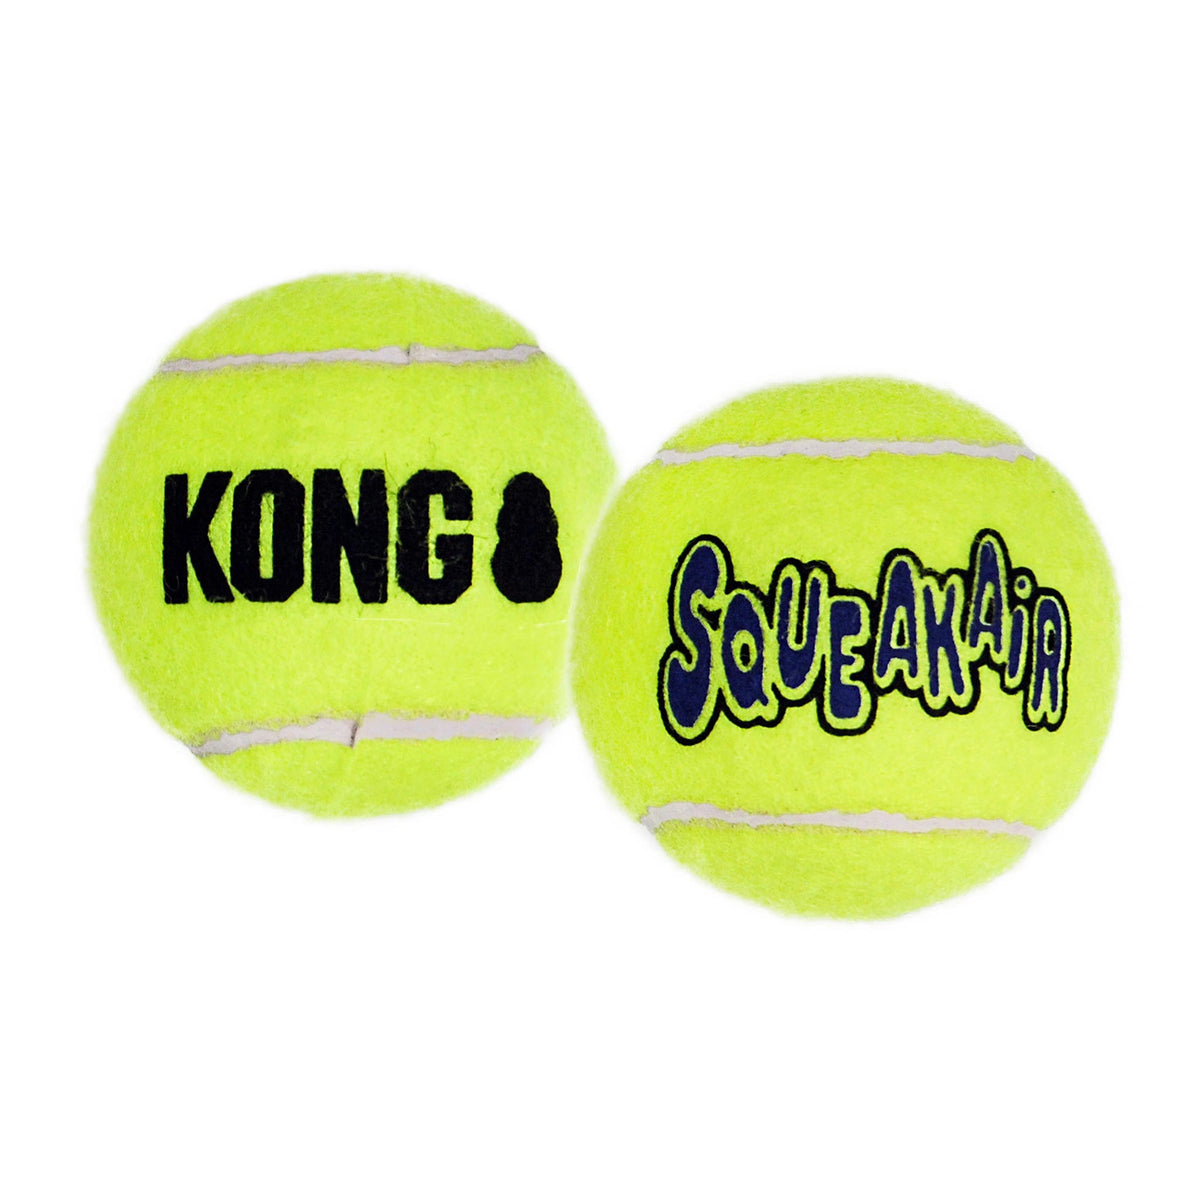 KONG Air Squeaker Balls for Dogs